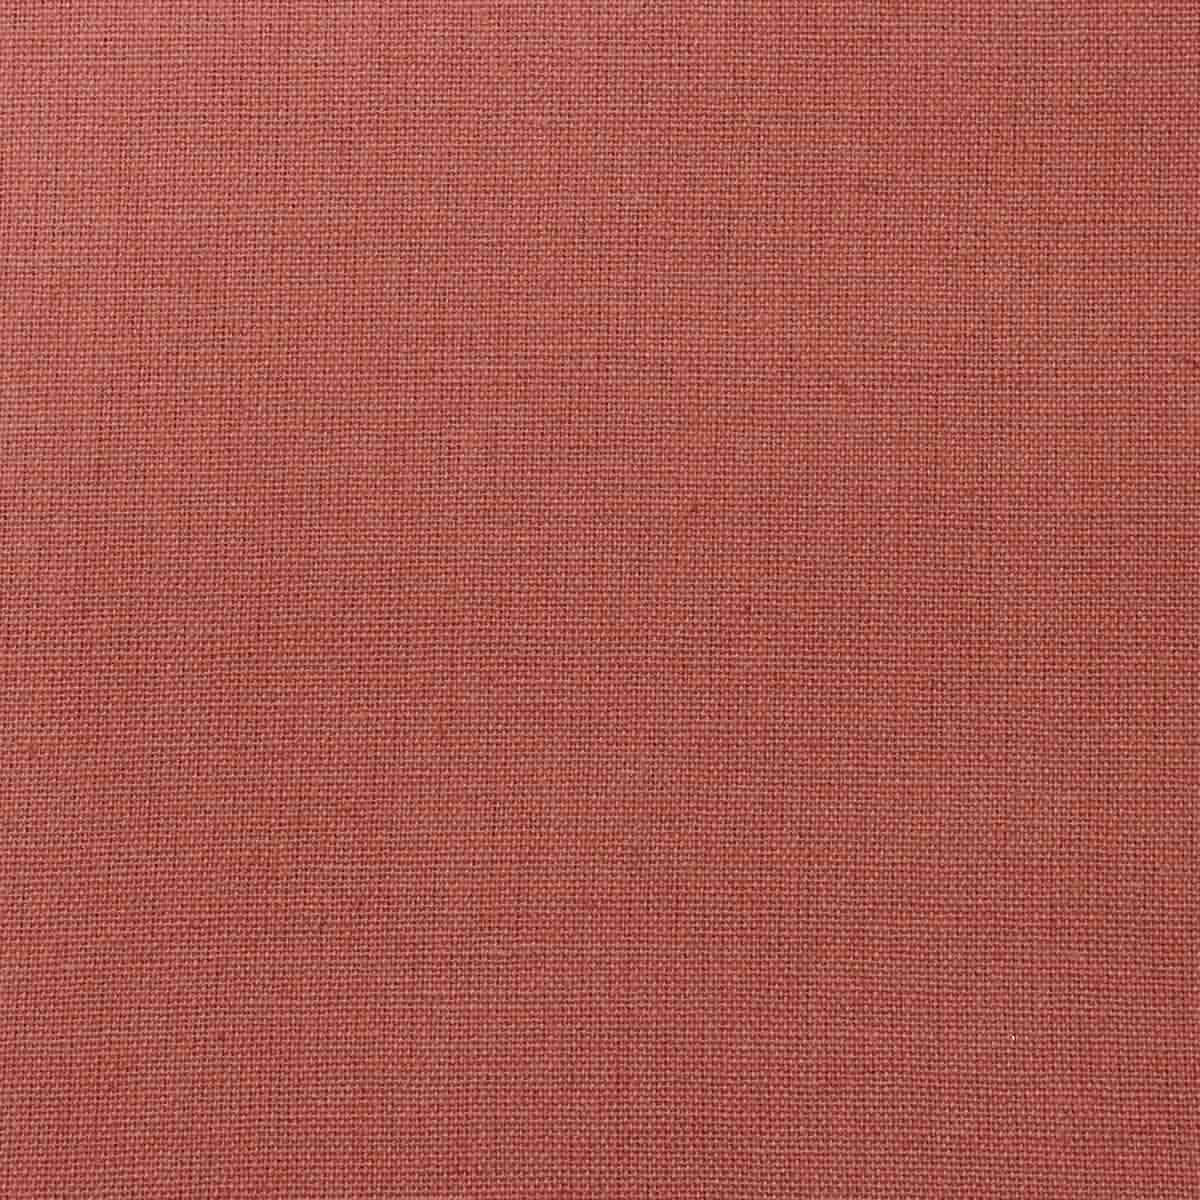 Dhabu Plain Cotton Red (2)